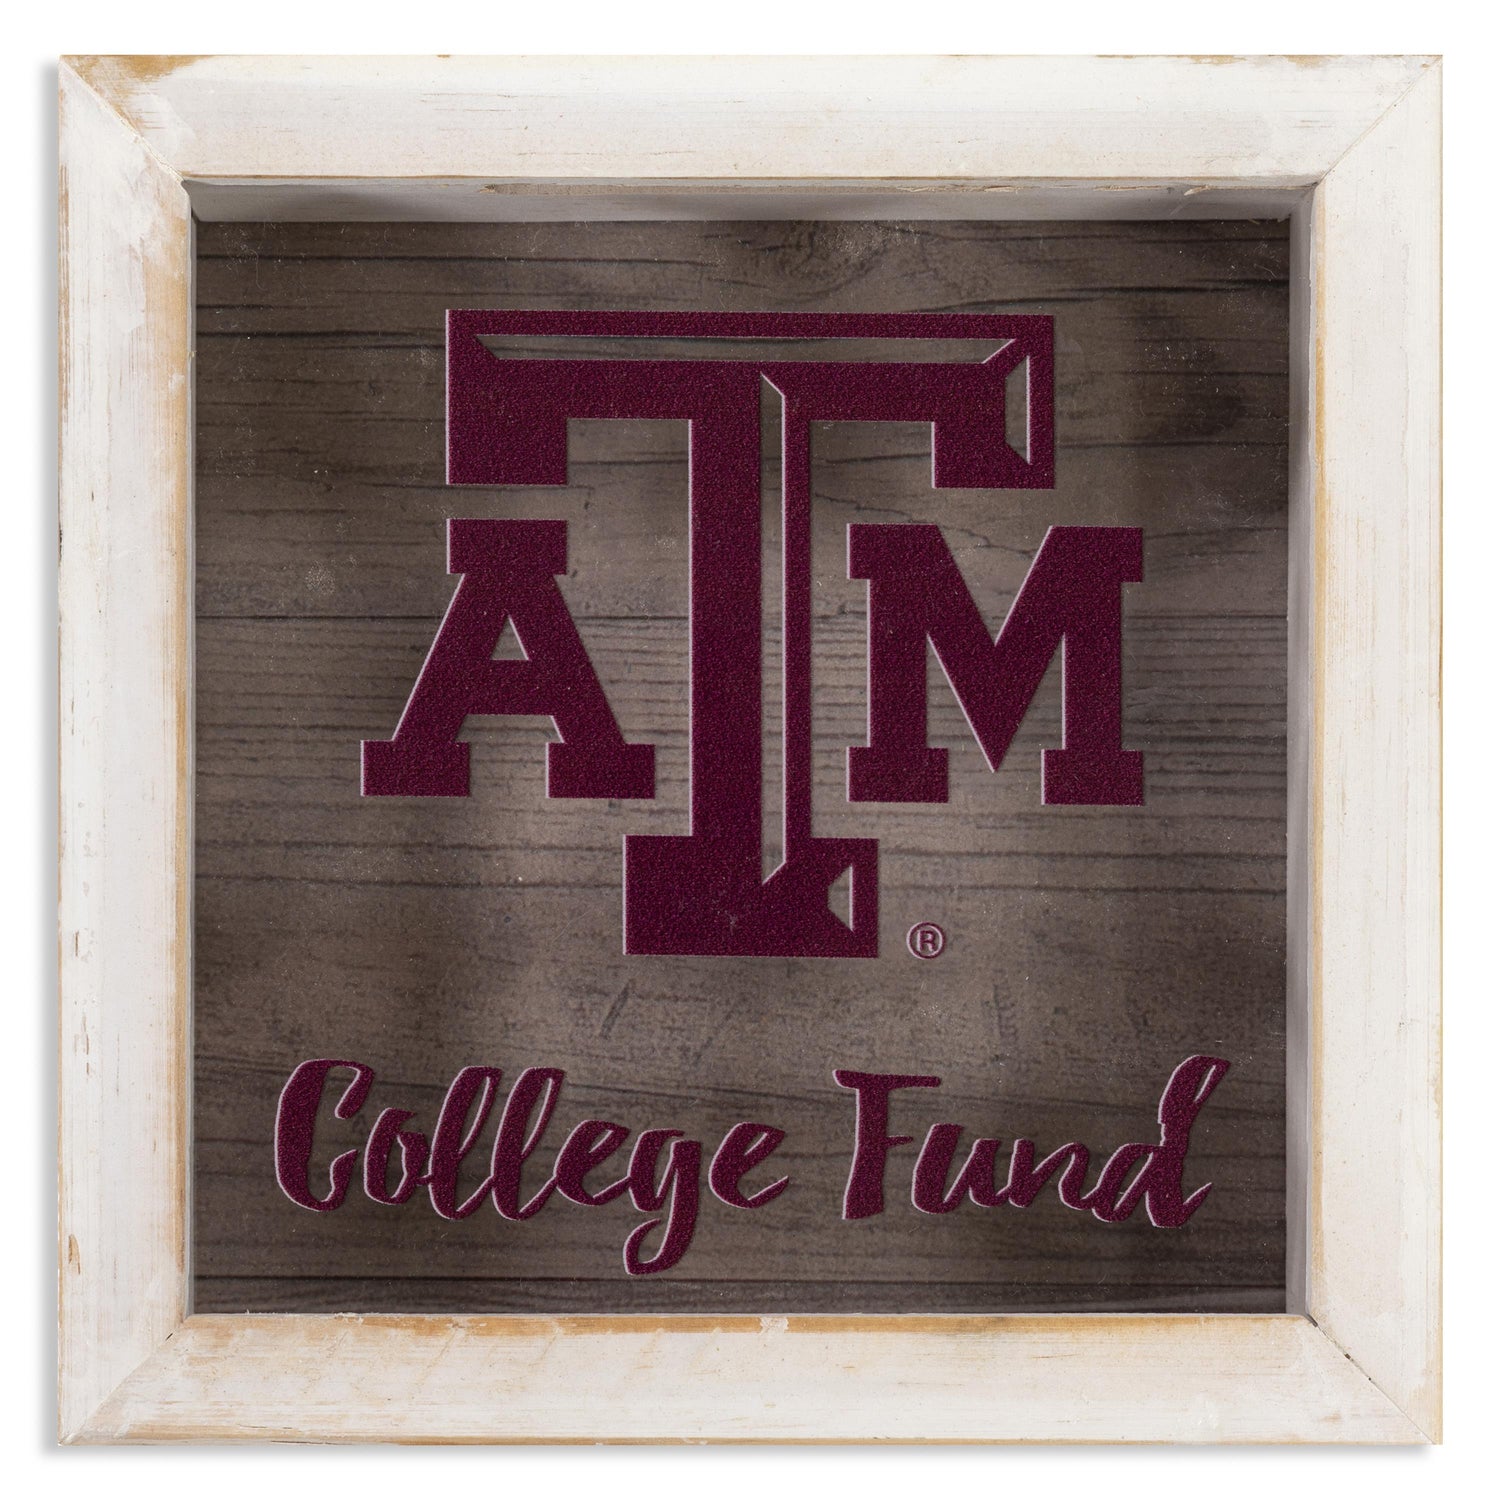 Texas A&M College Fund Money Box